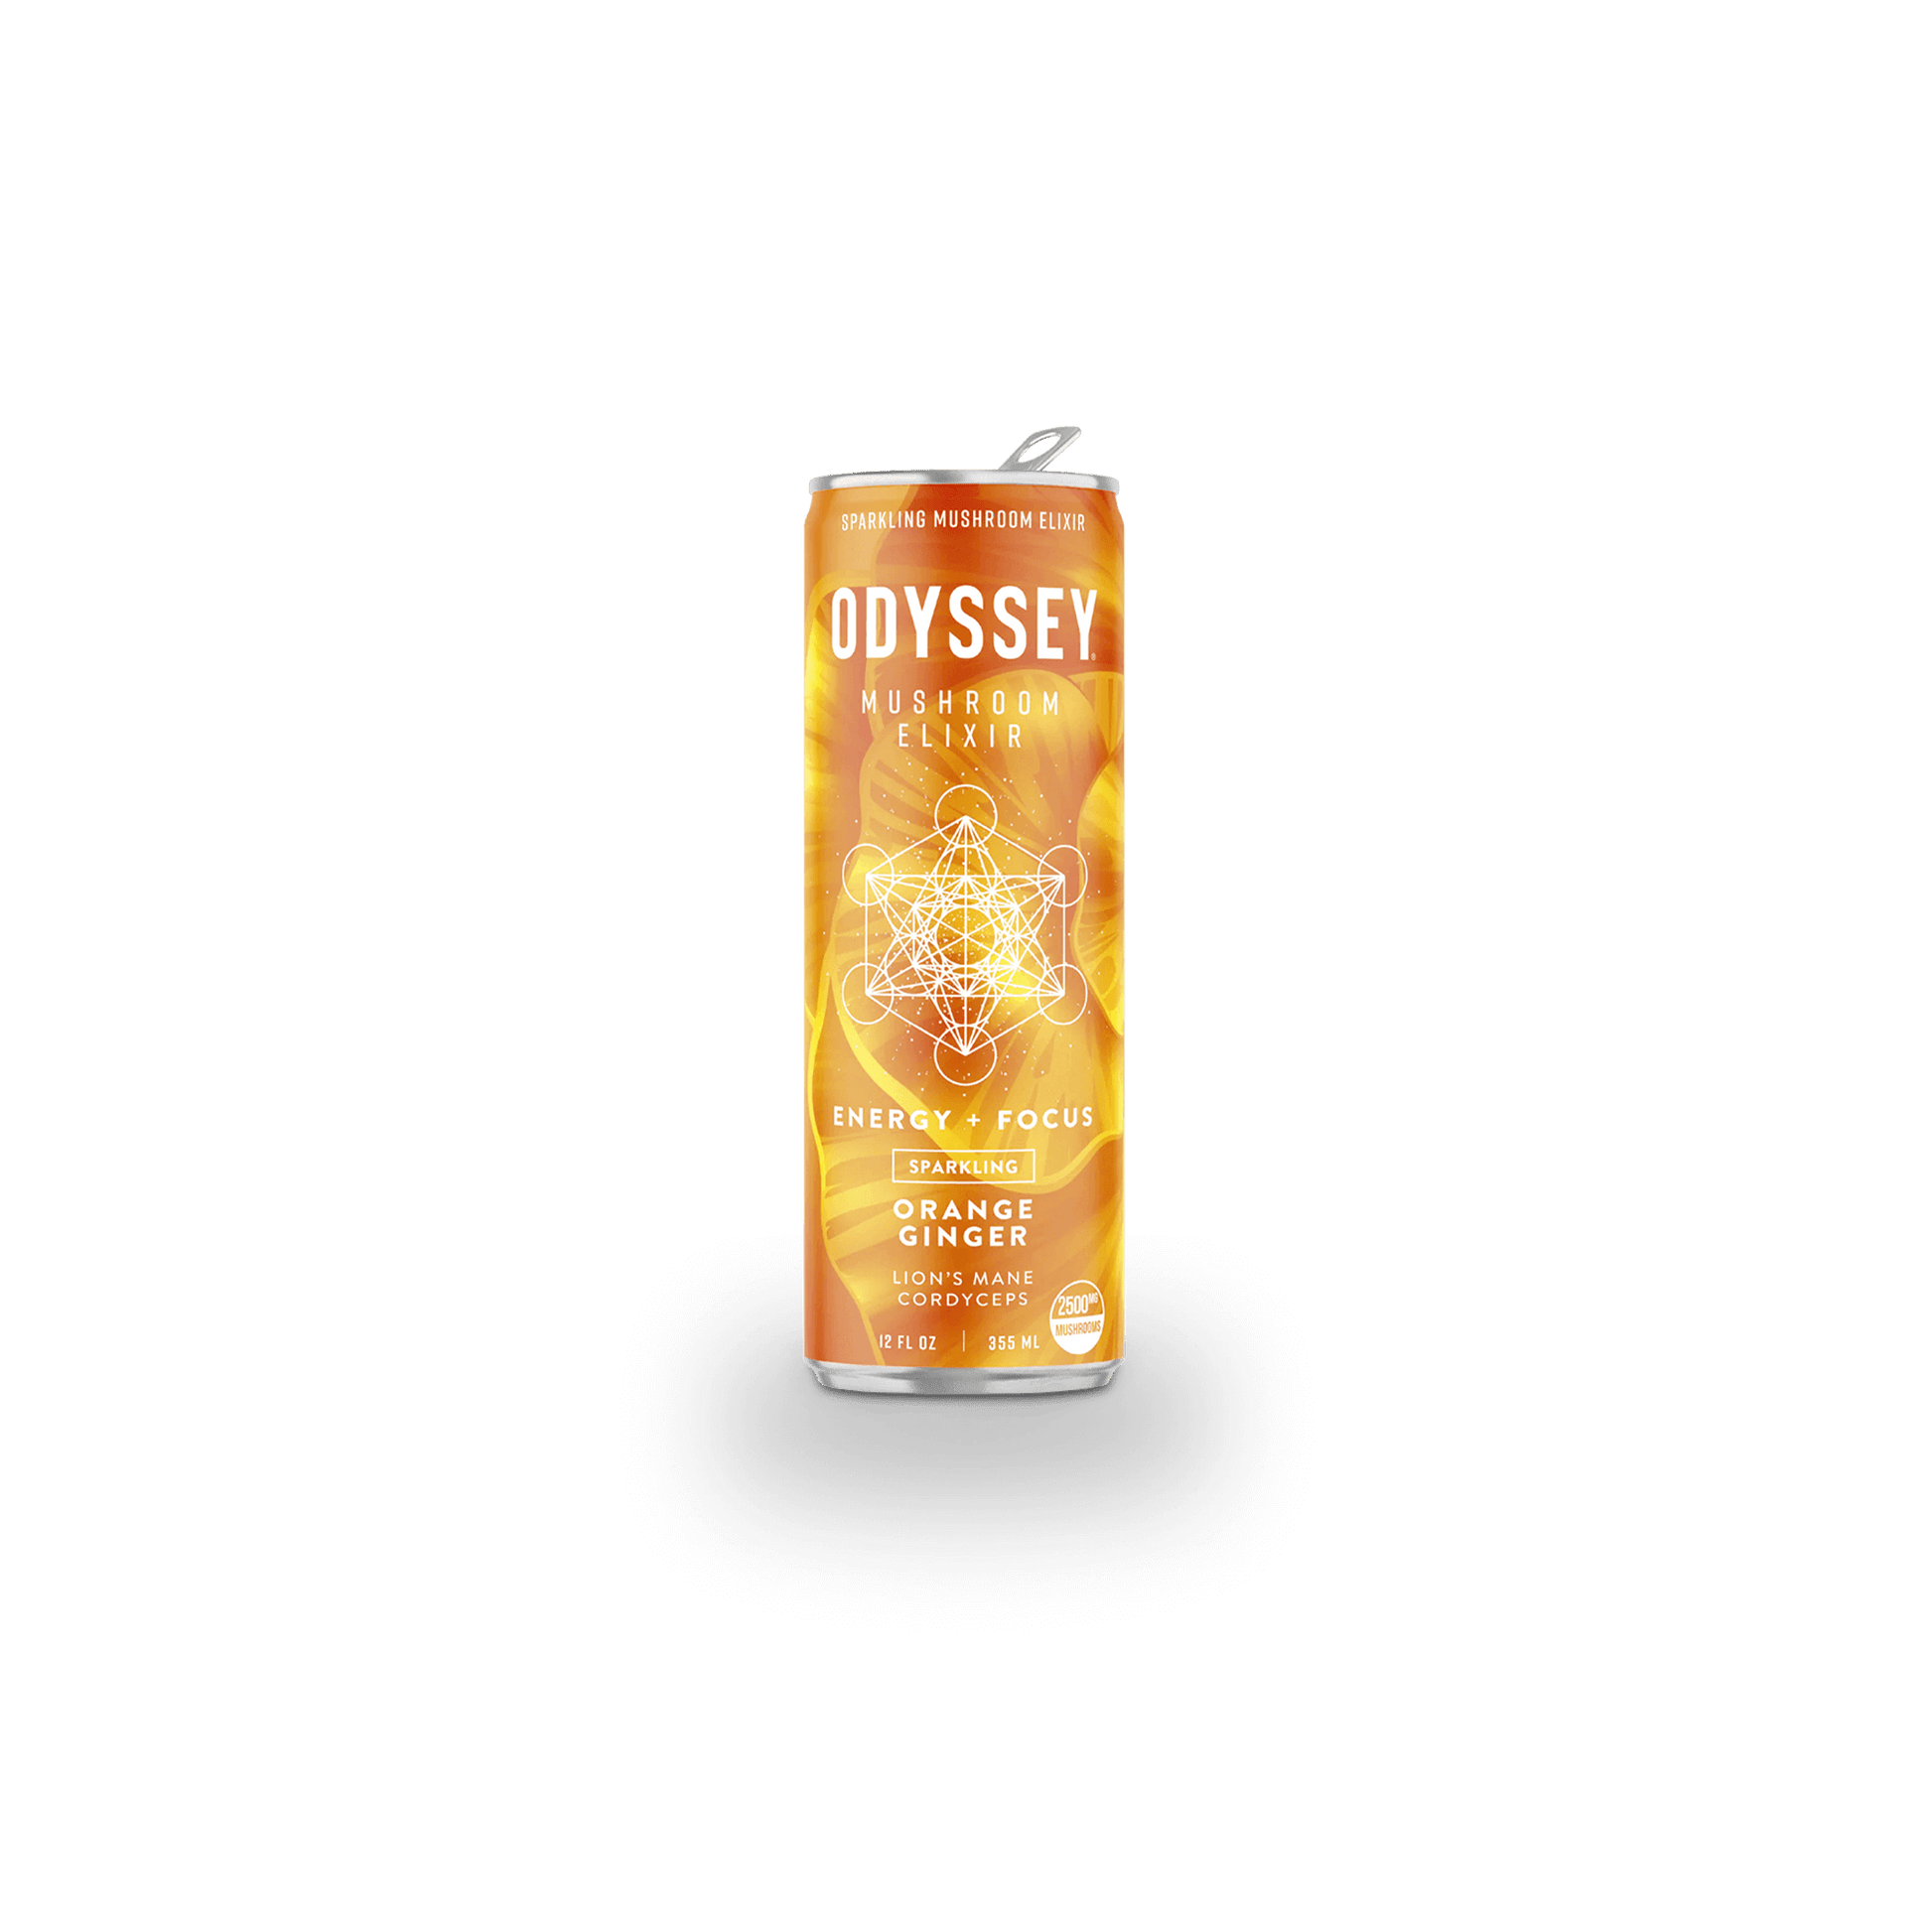 Odyssey Mushroom Elixir | Energy & Focus - Orange Ginger Can